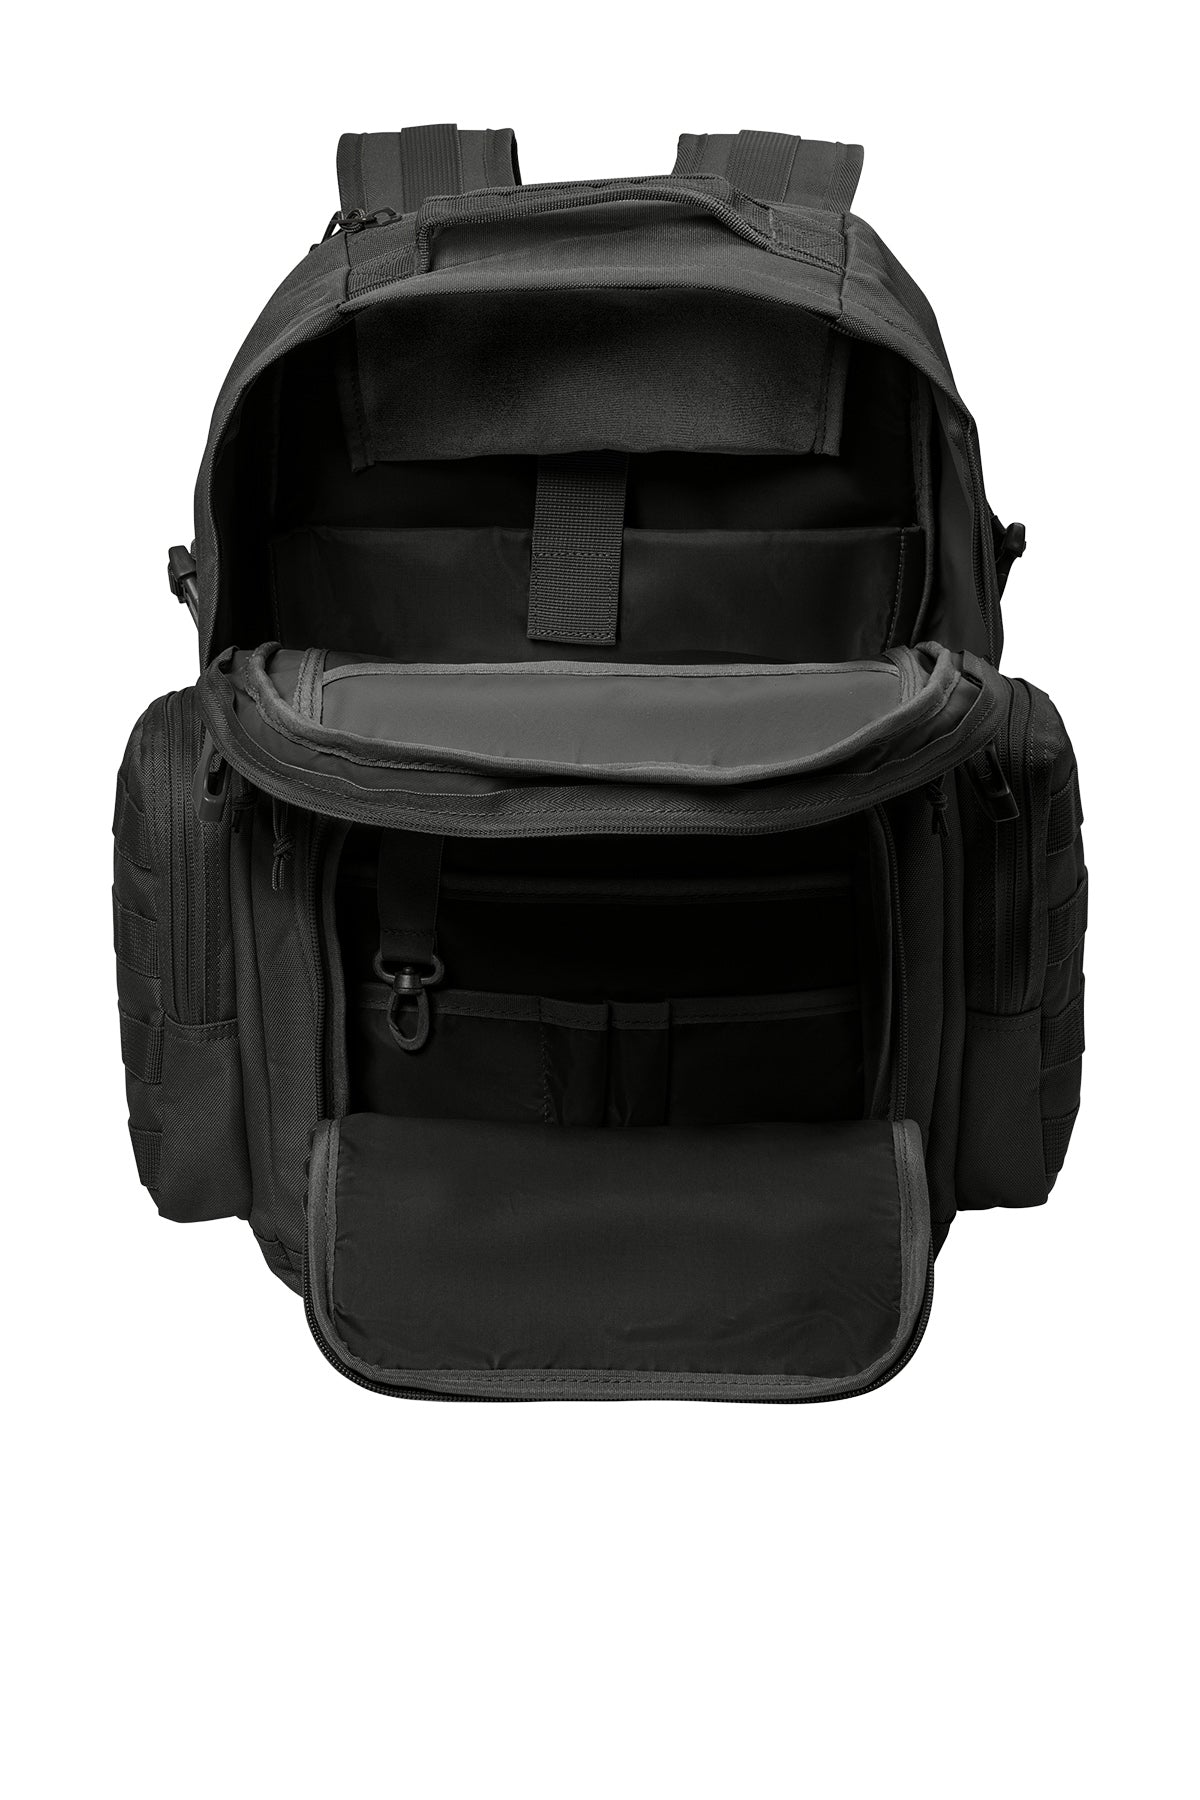 CornerStone® Tactical Backpack